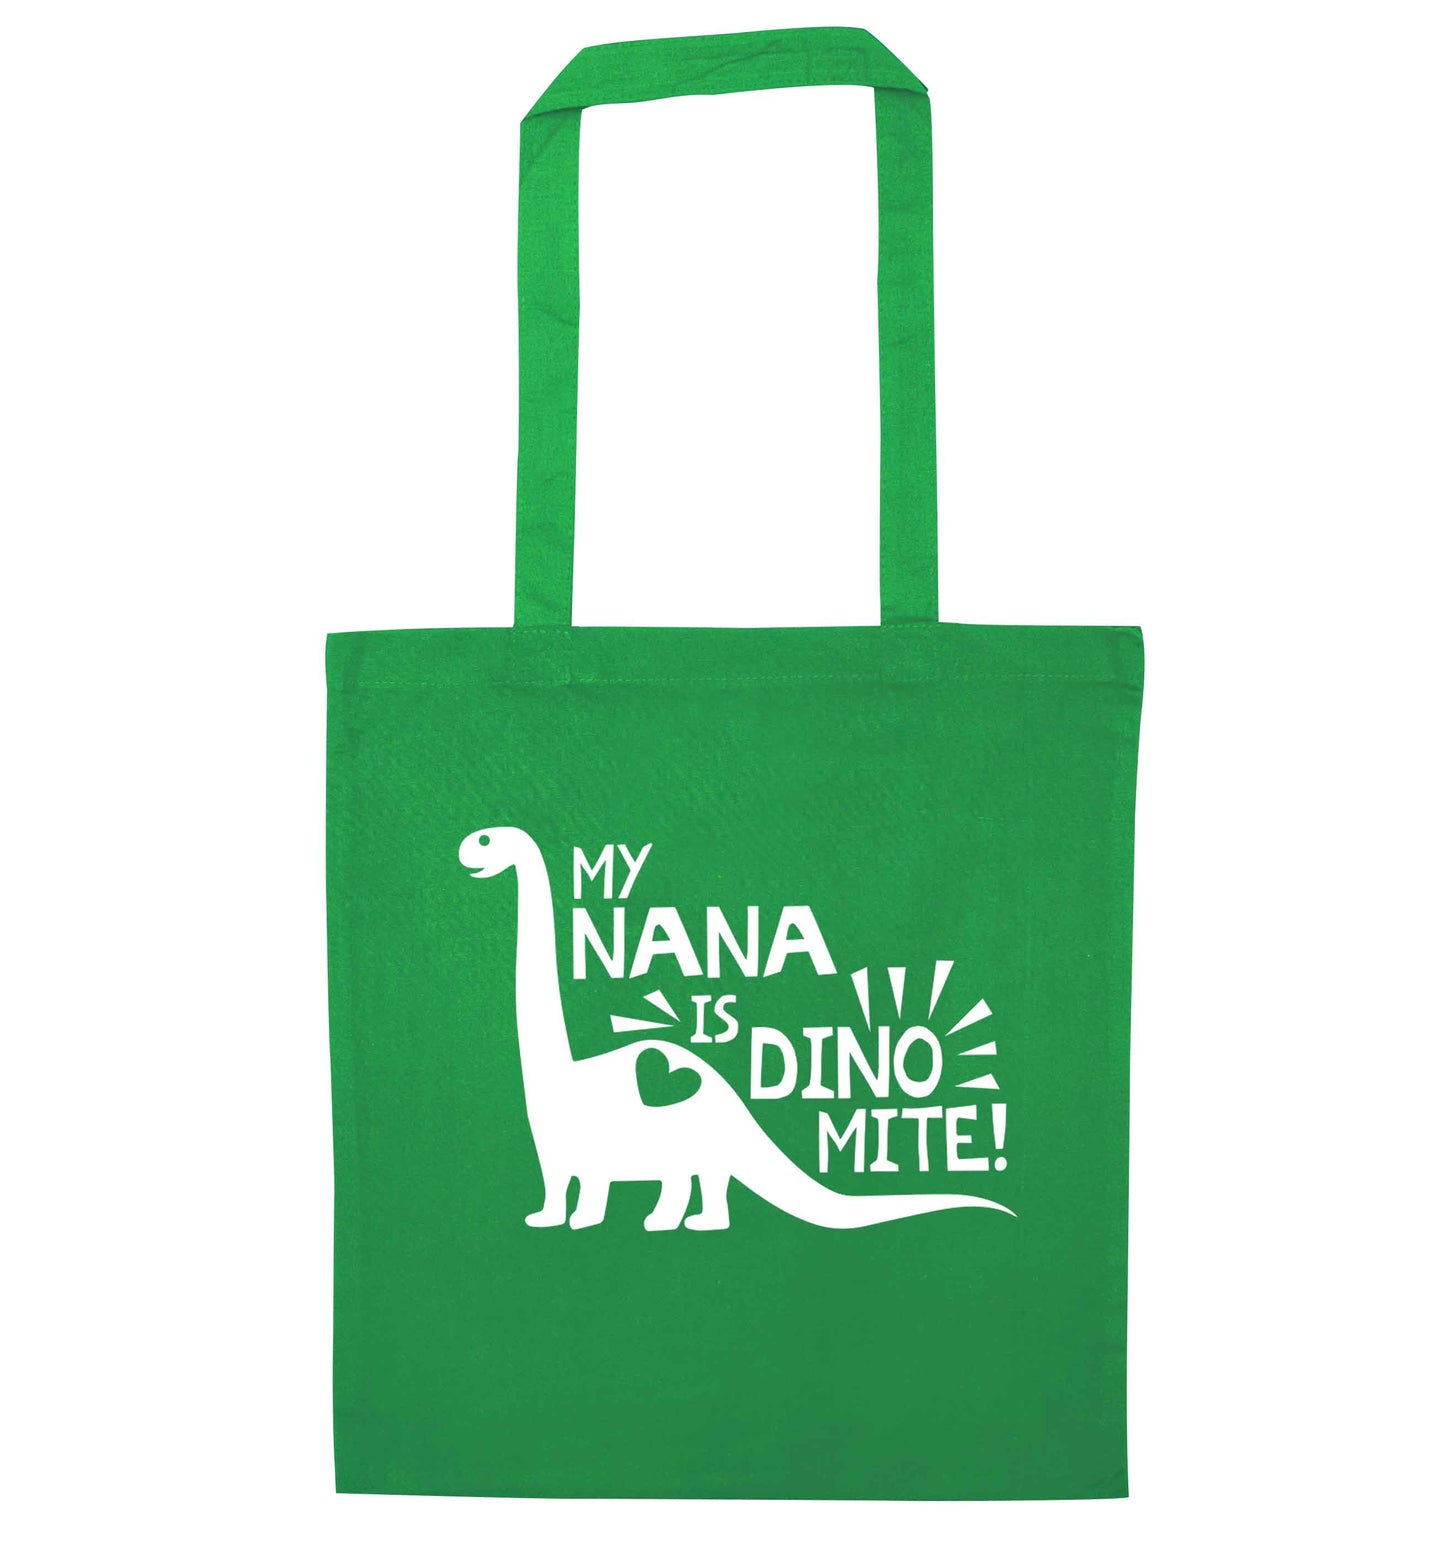 My nana is dinomite! green tote bag